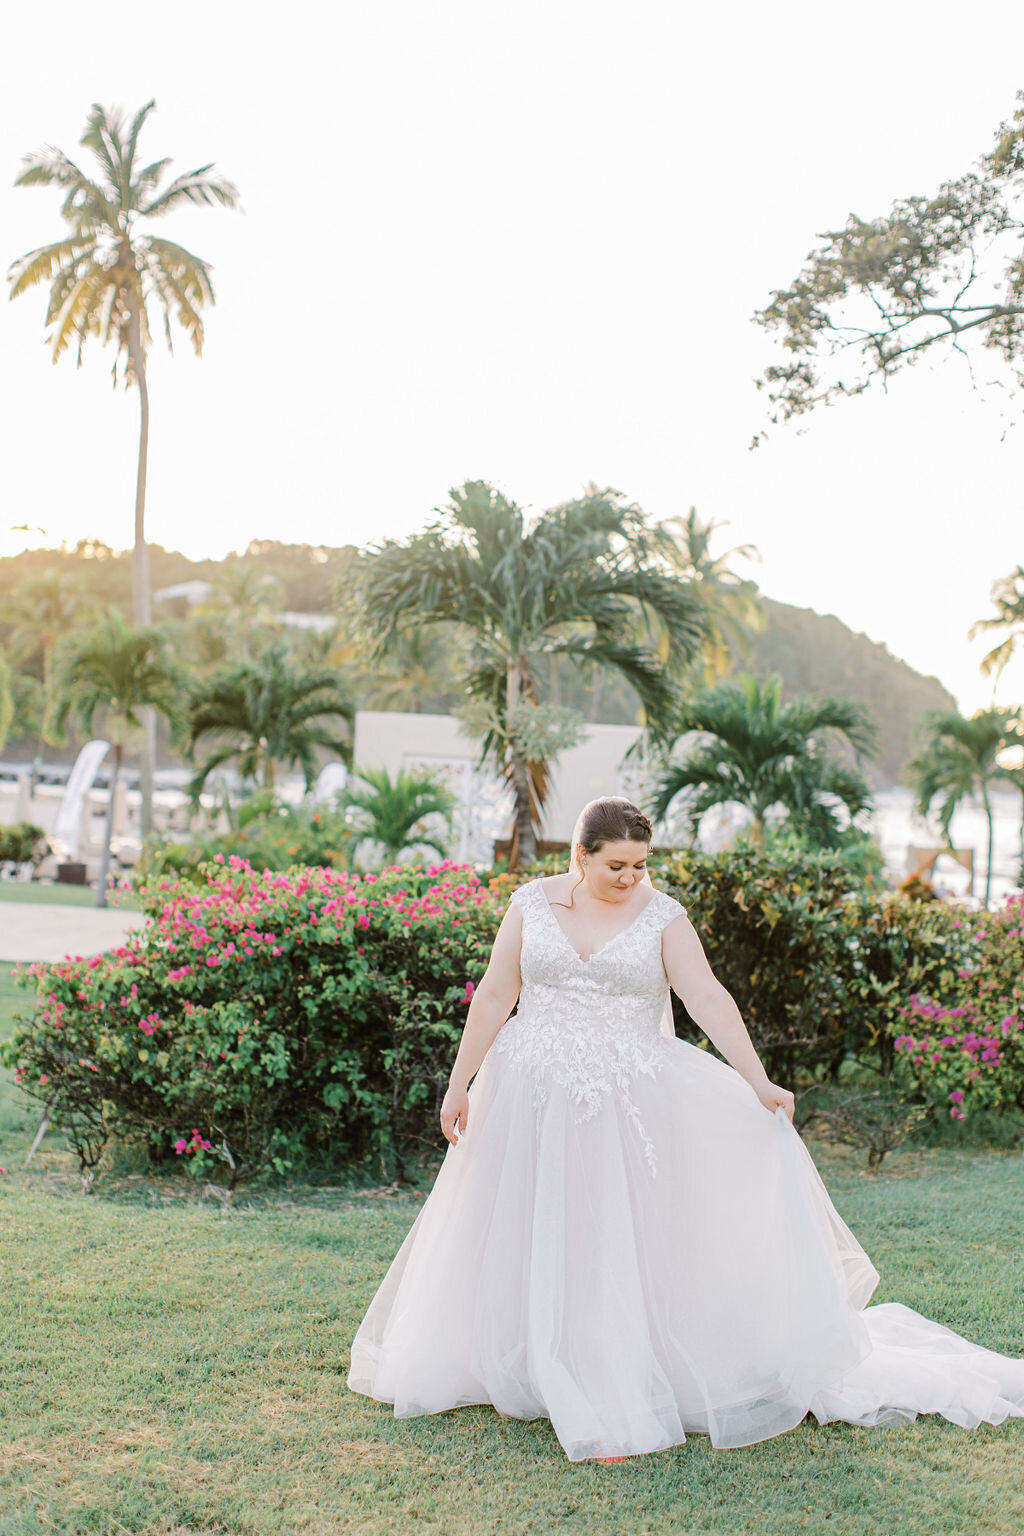 Royalton St. Lucia Destination Wedding in the Caribbean | Adela Antal Photography